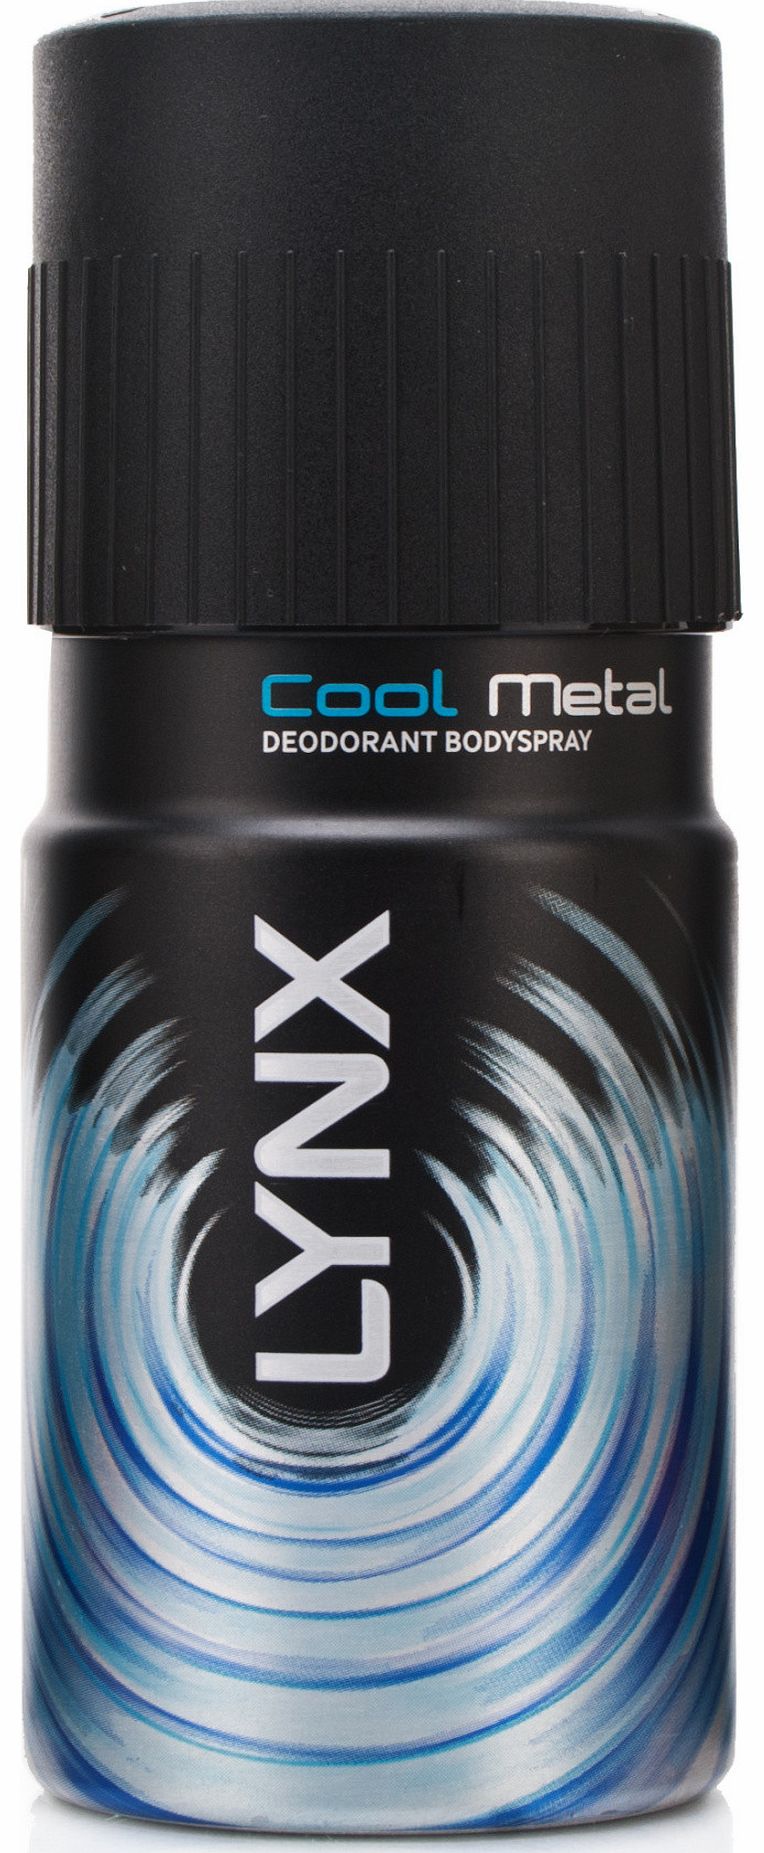 Cool Metal Deodorant Bodyspray